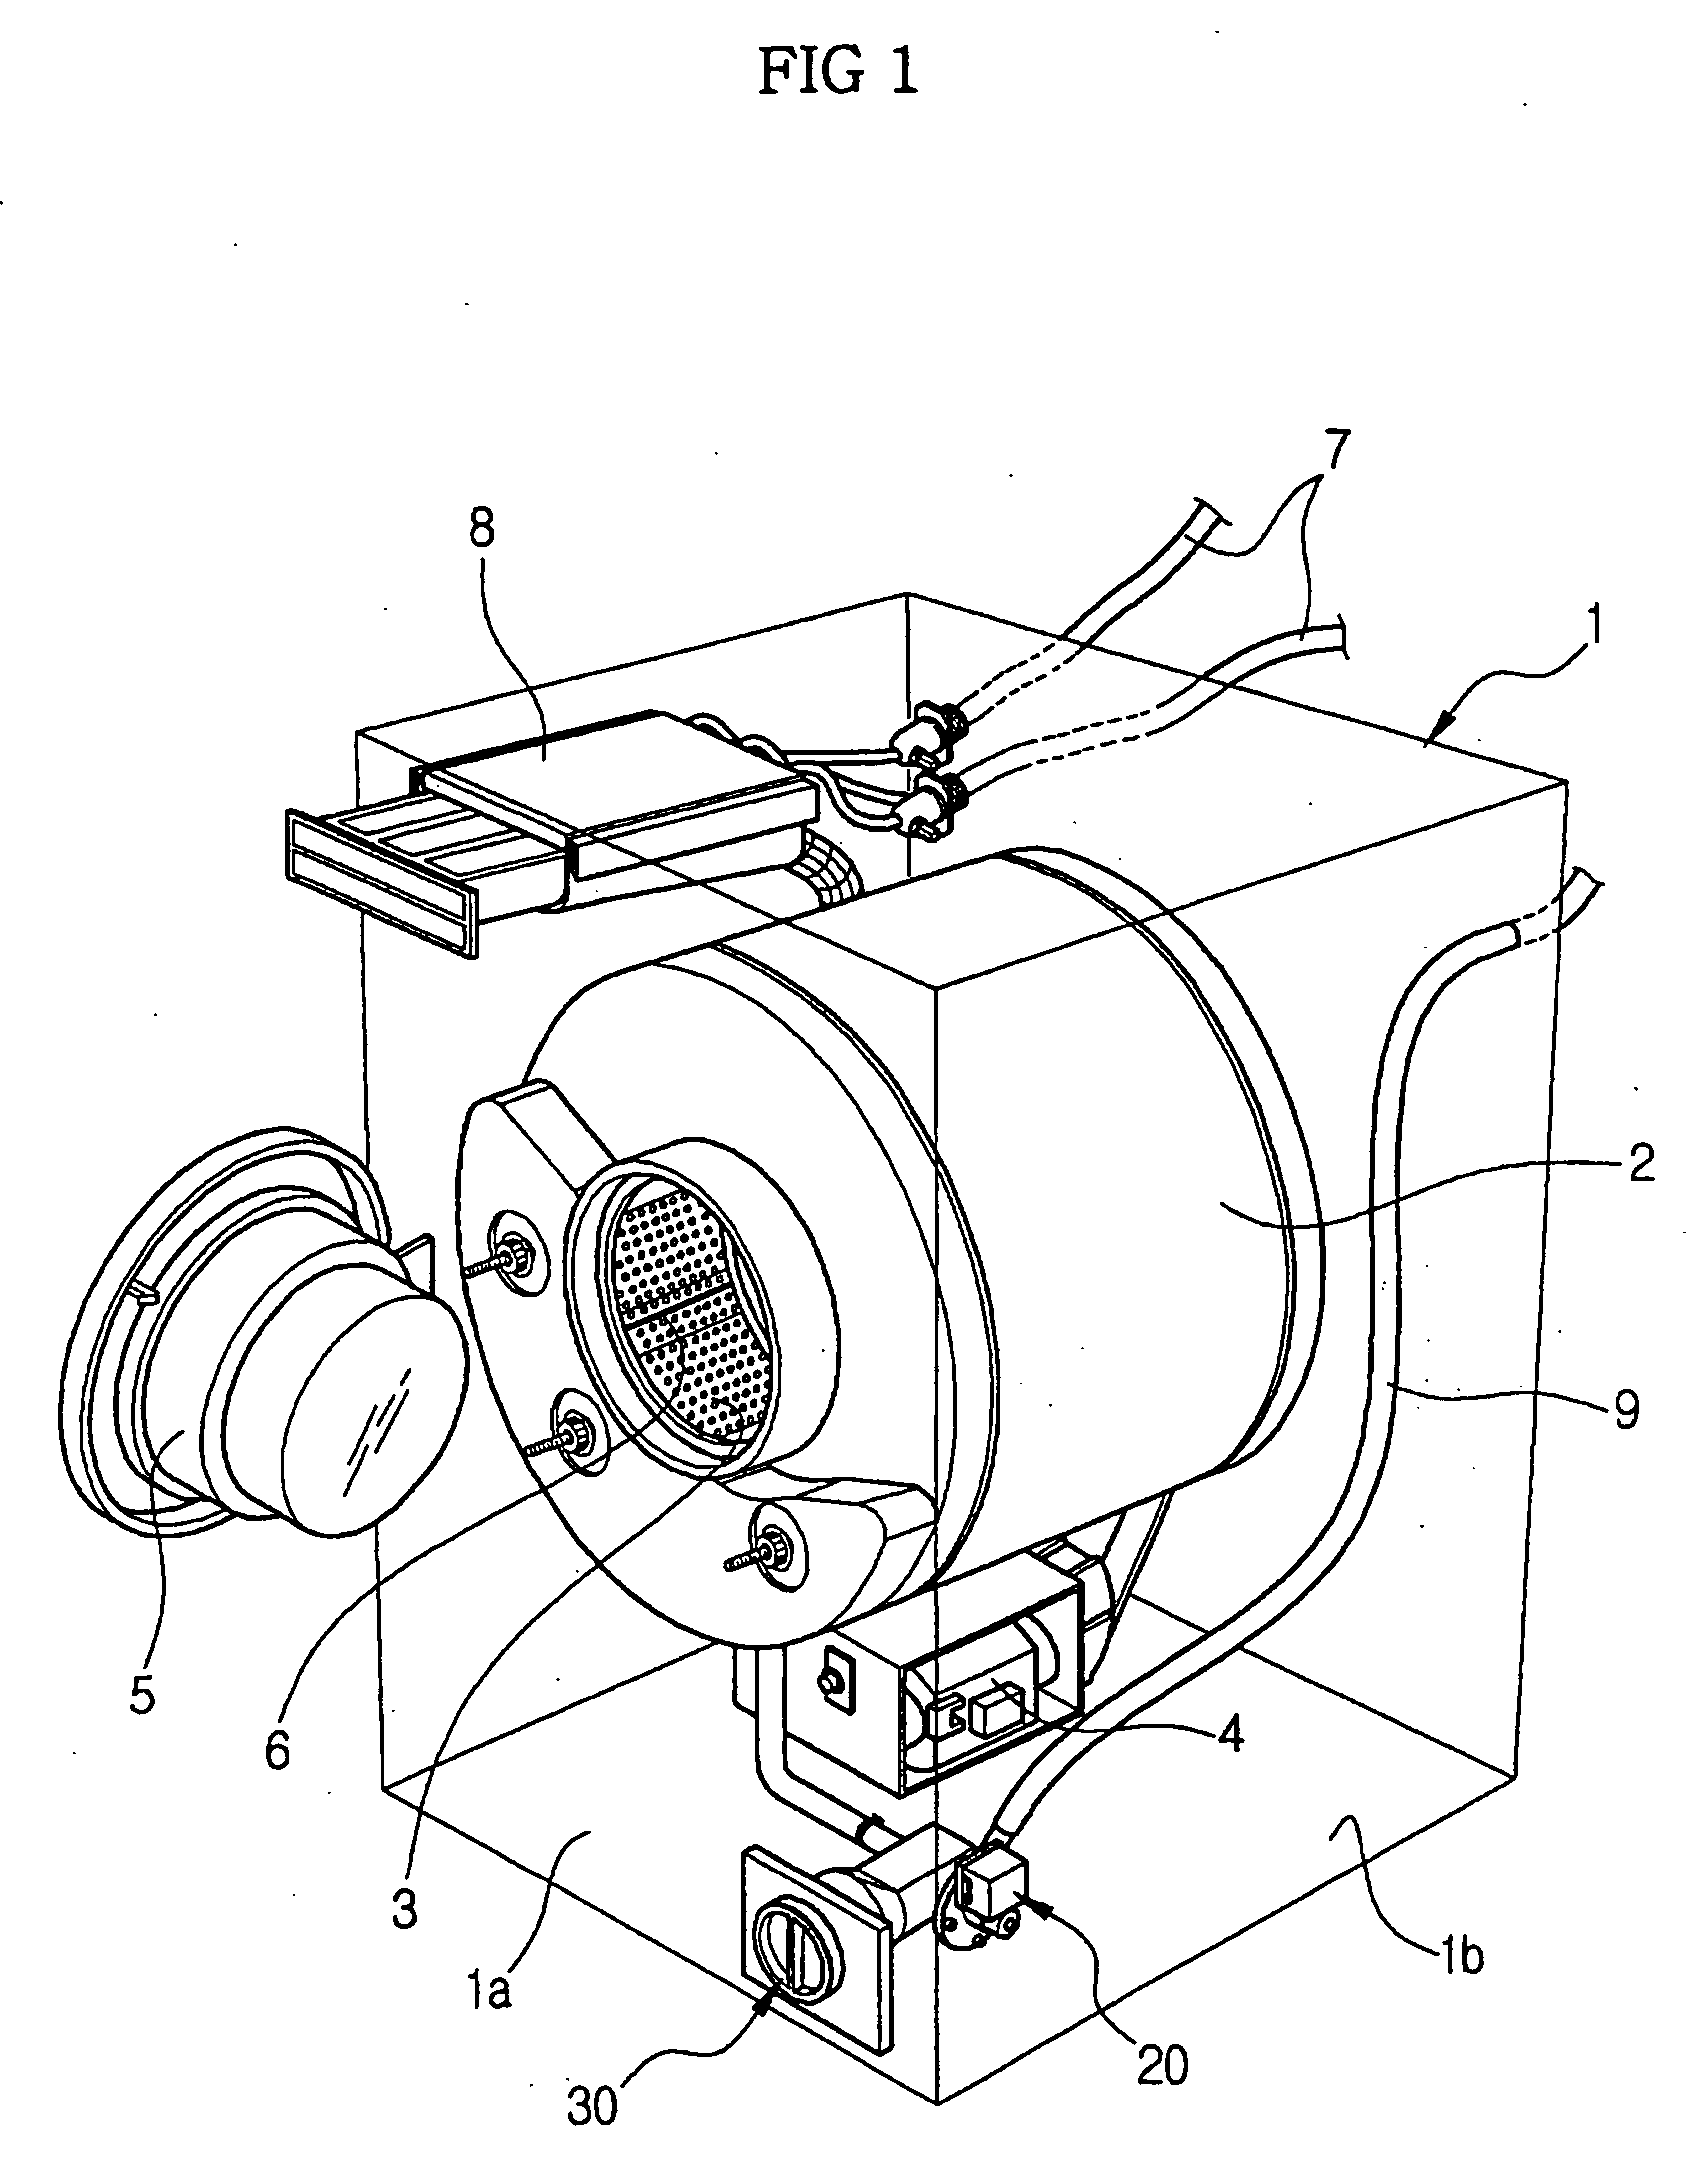 Washing machine having drain casing